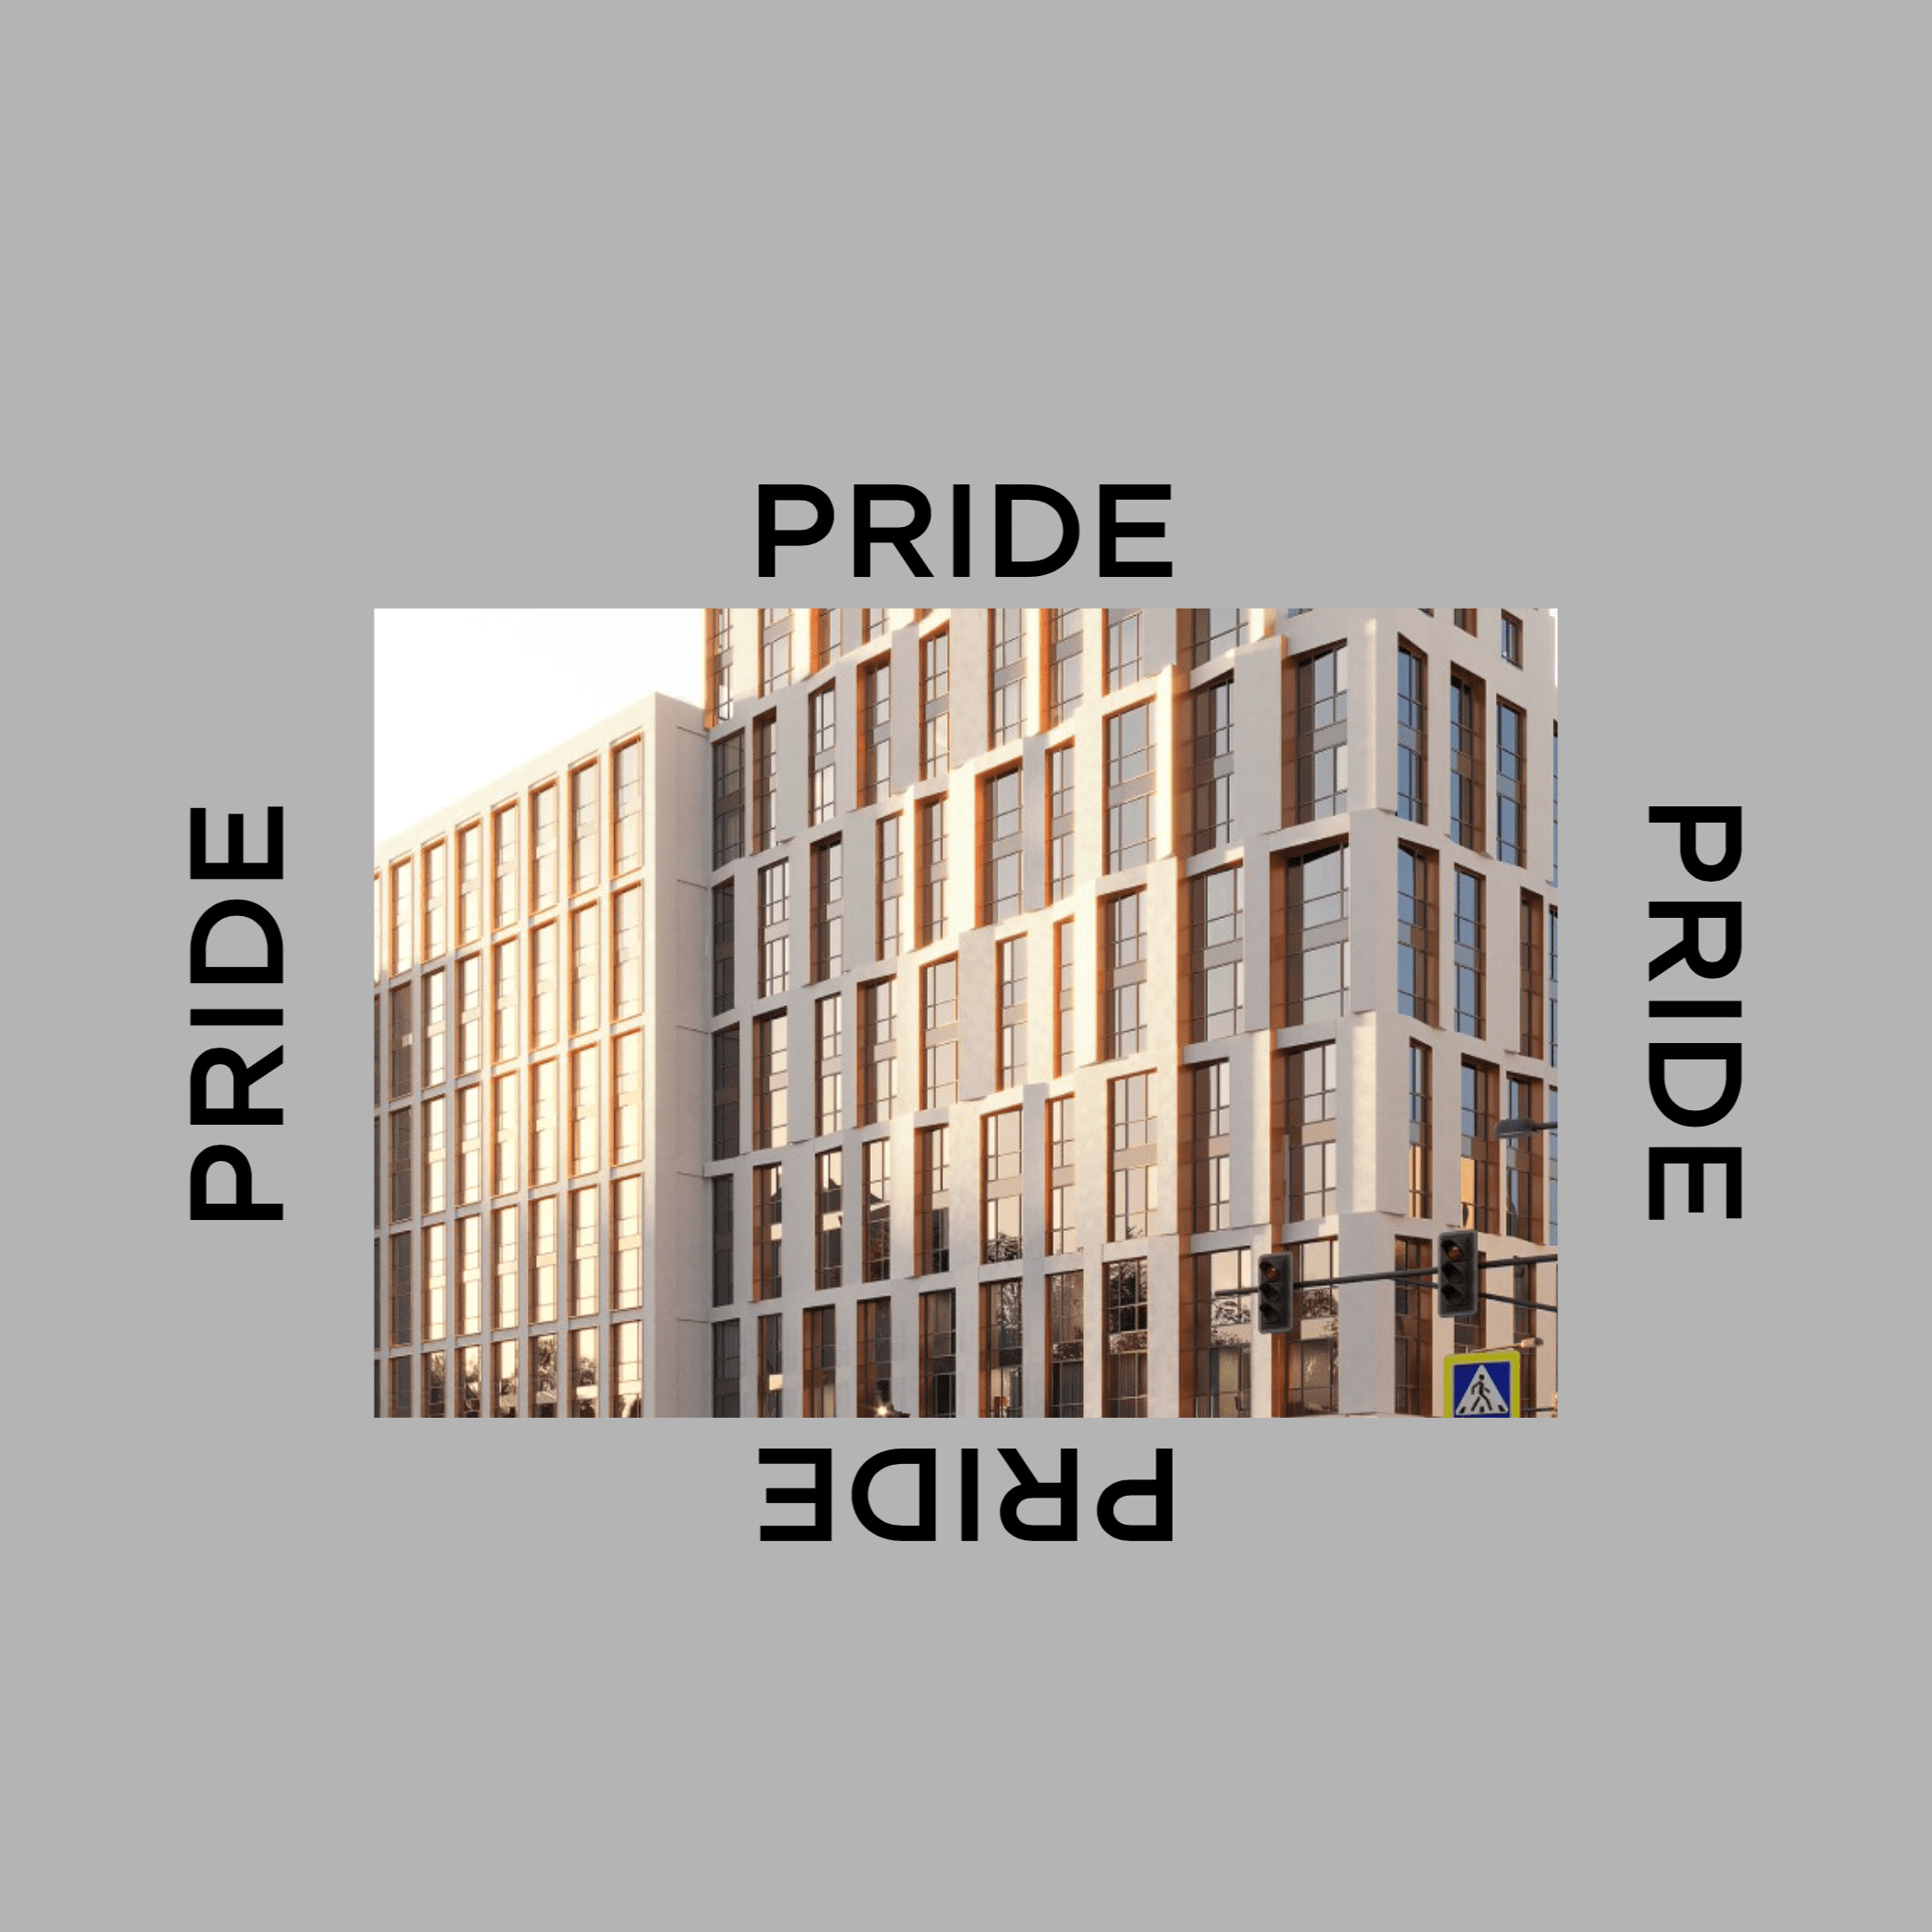 ЖК Pride. ЖК Прайд Пионер. ЖК Pride логотип. Прайд ЖК архитектурное бюро.